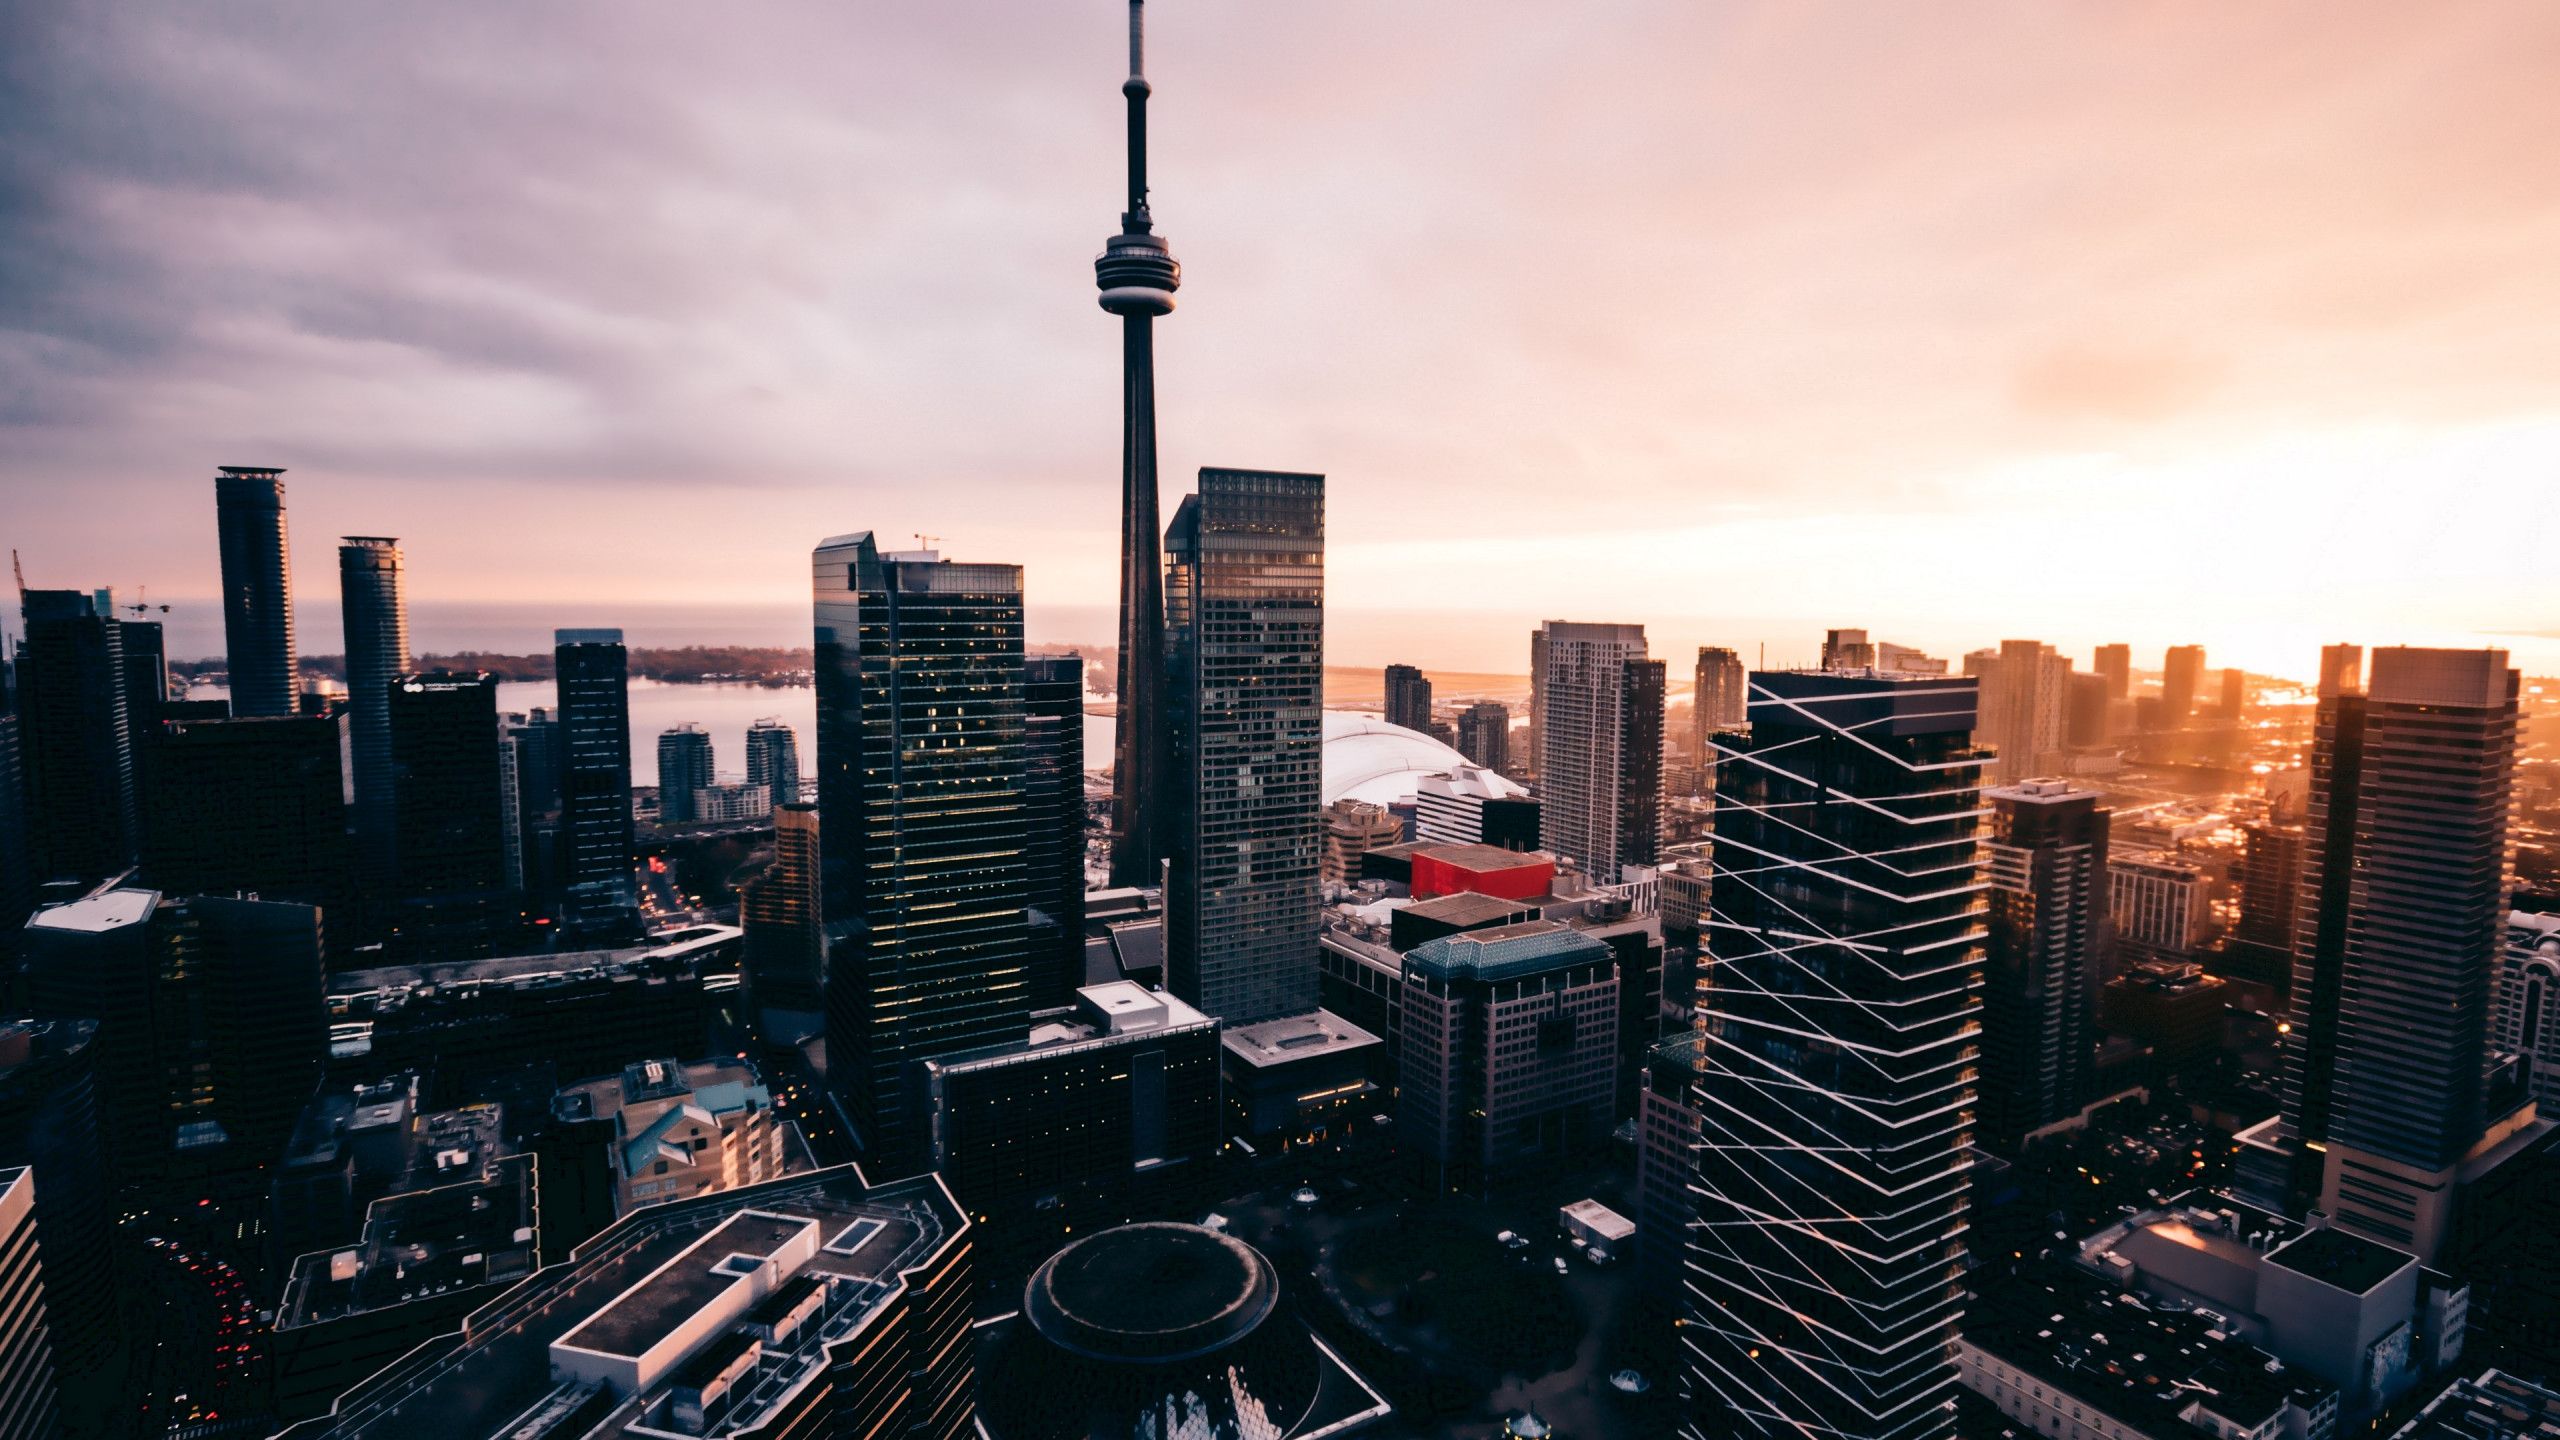 Download wallpaper: Skyscraper from Toronto 2560x1440